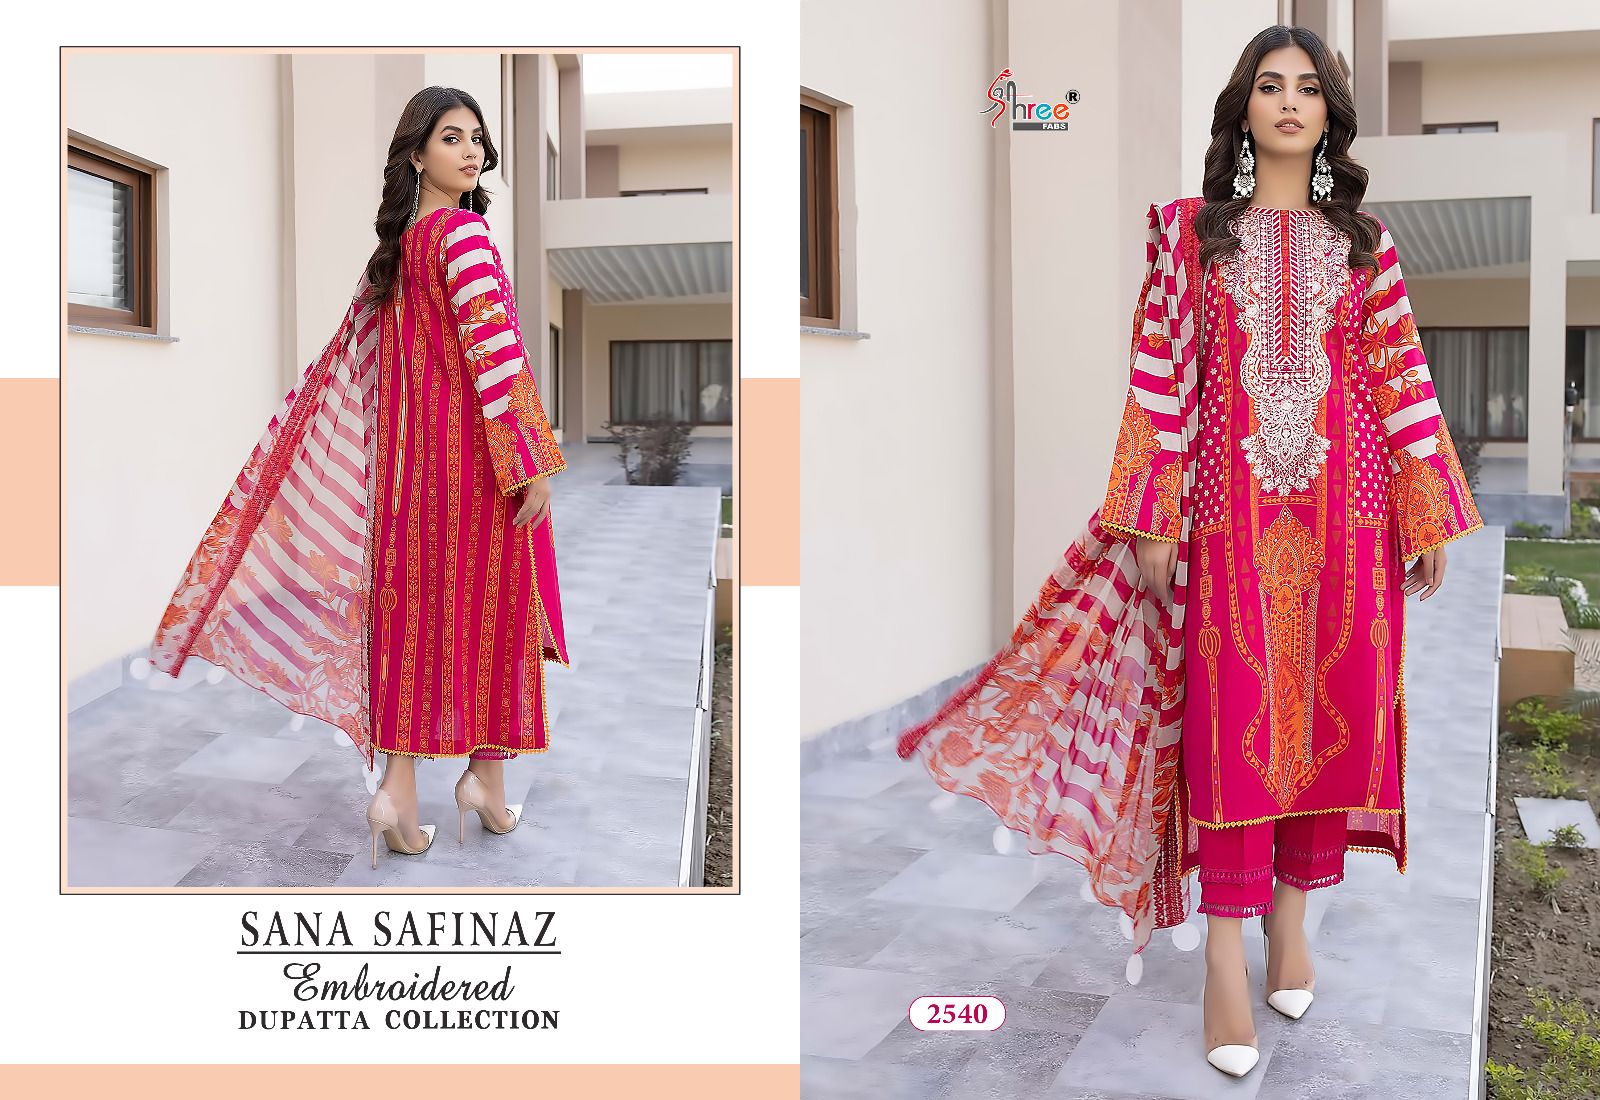 Shree Sana Safinaz Embroidered Dupatta collection 3